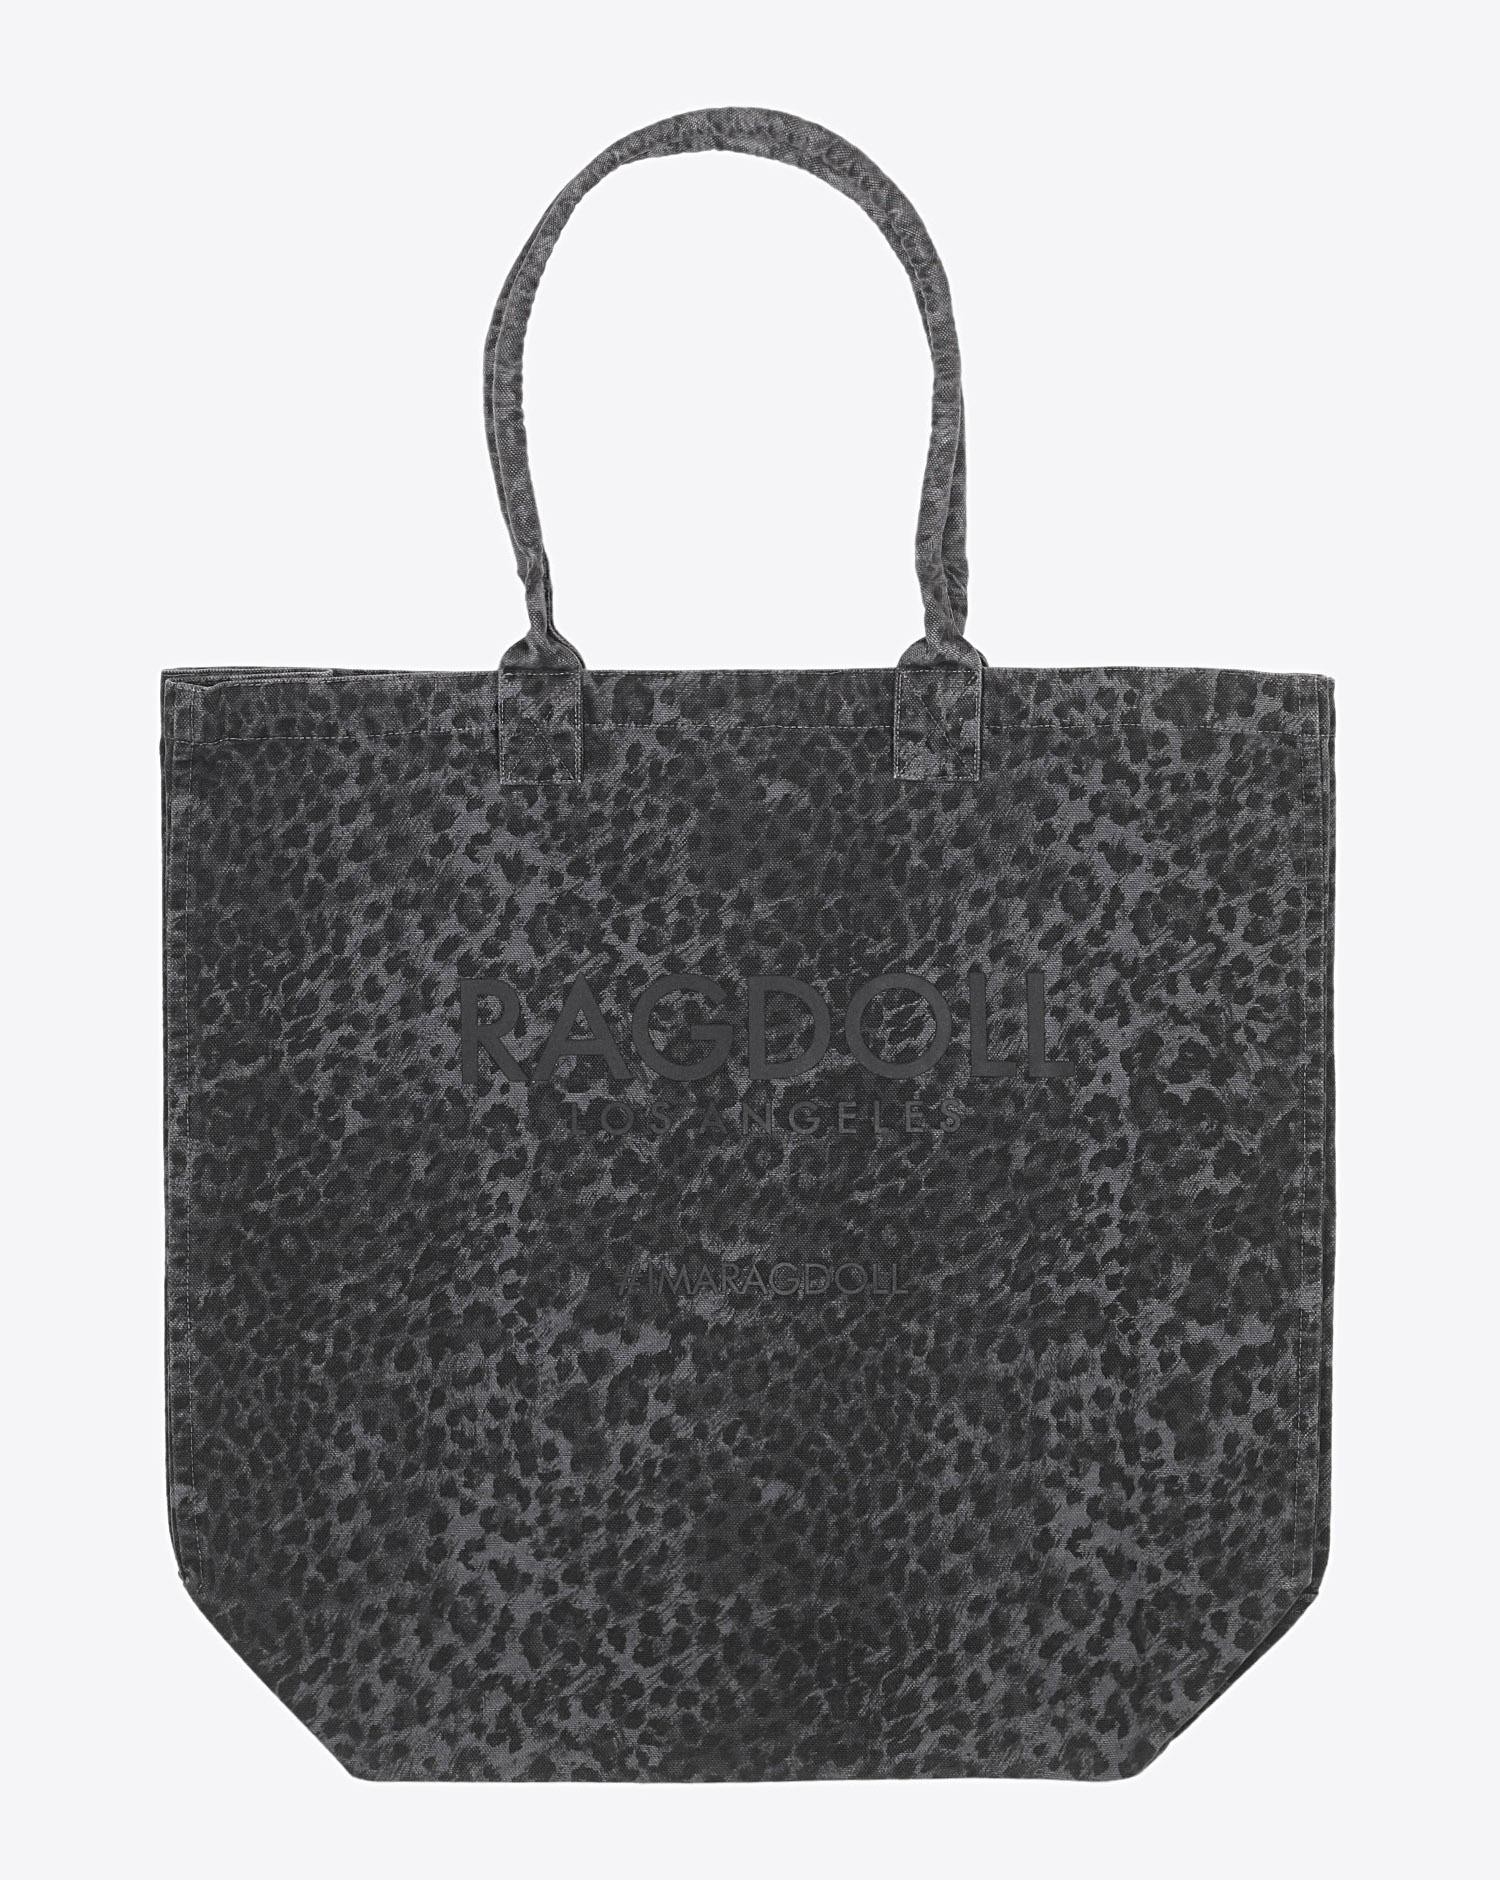 Ragdoll LA Holiday Bag - Anthracite Leopard  